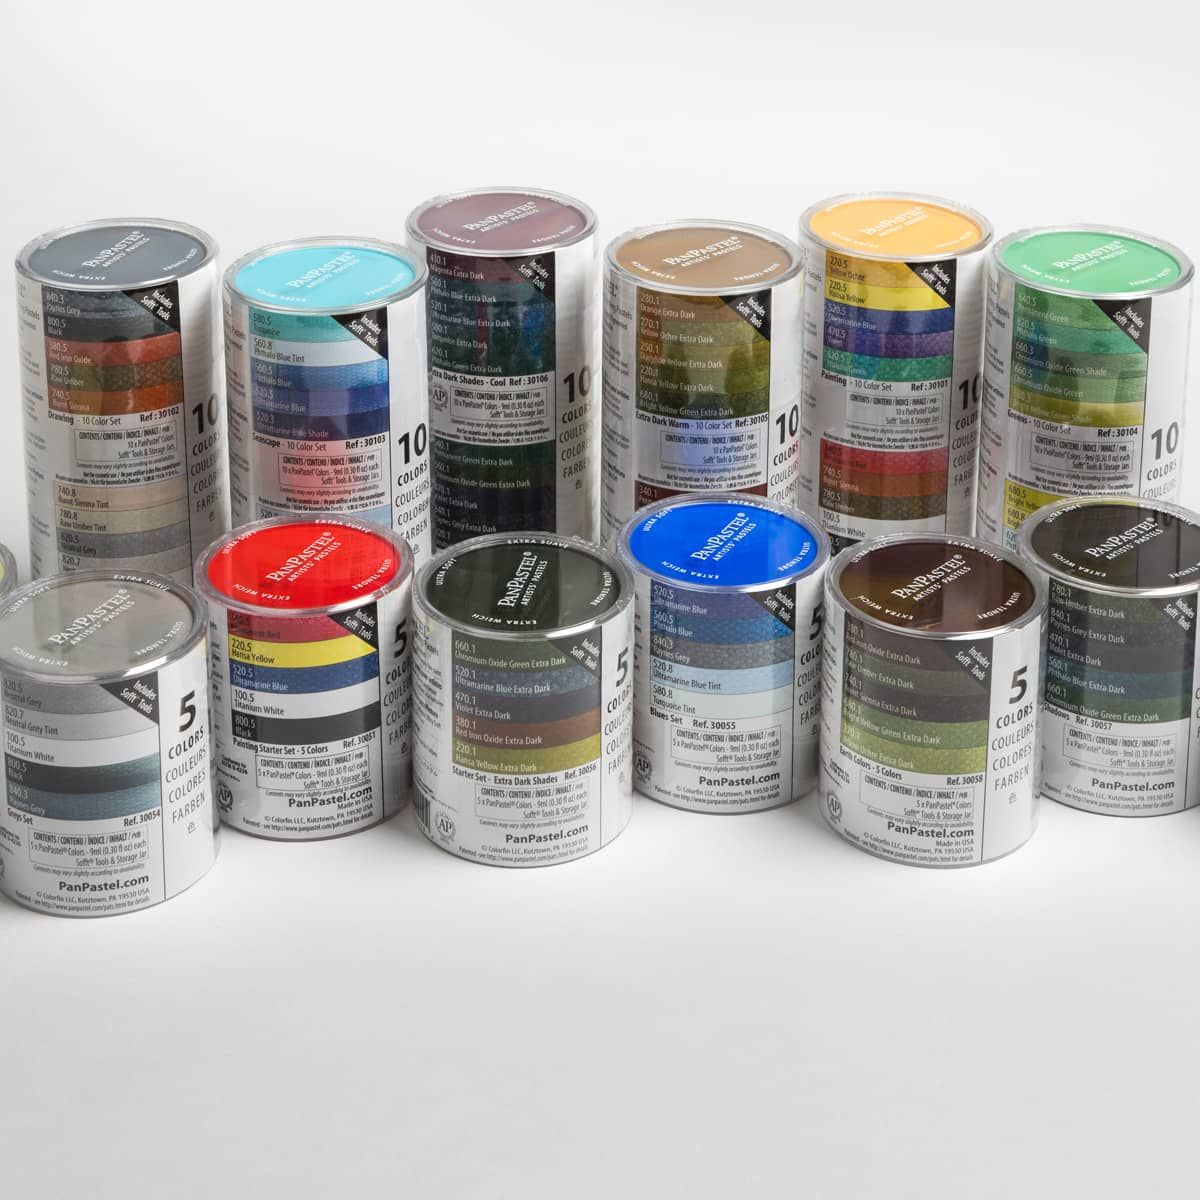 PanPastel™ Ultra Soft Artists' Painting Pastel Sets